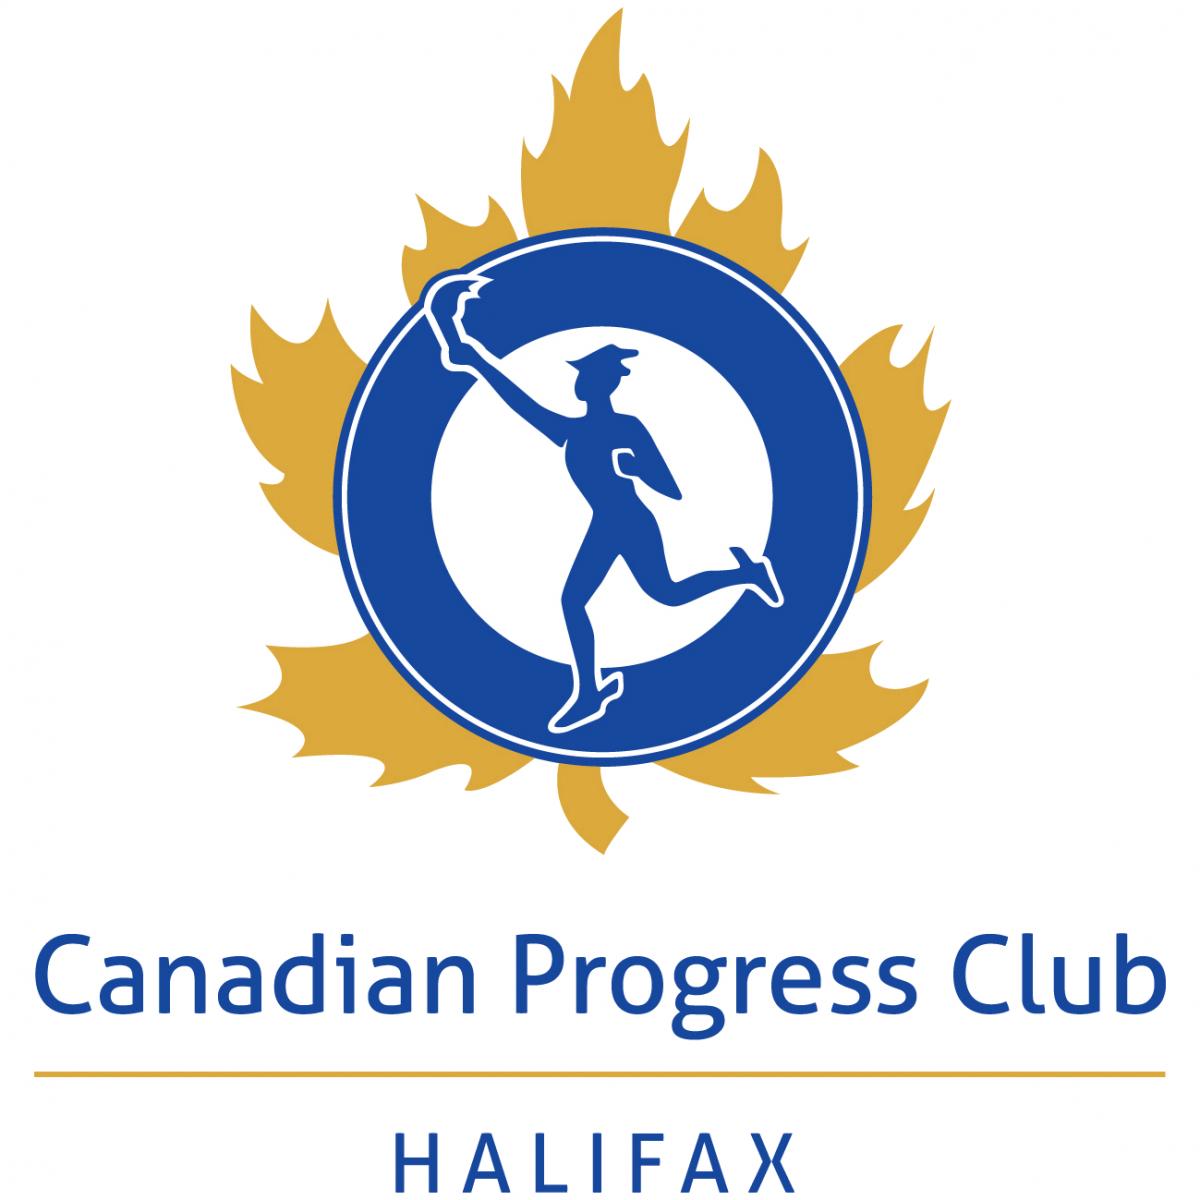  Canadian Progress Club Halifax